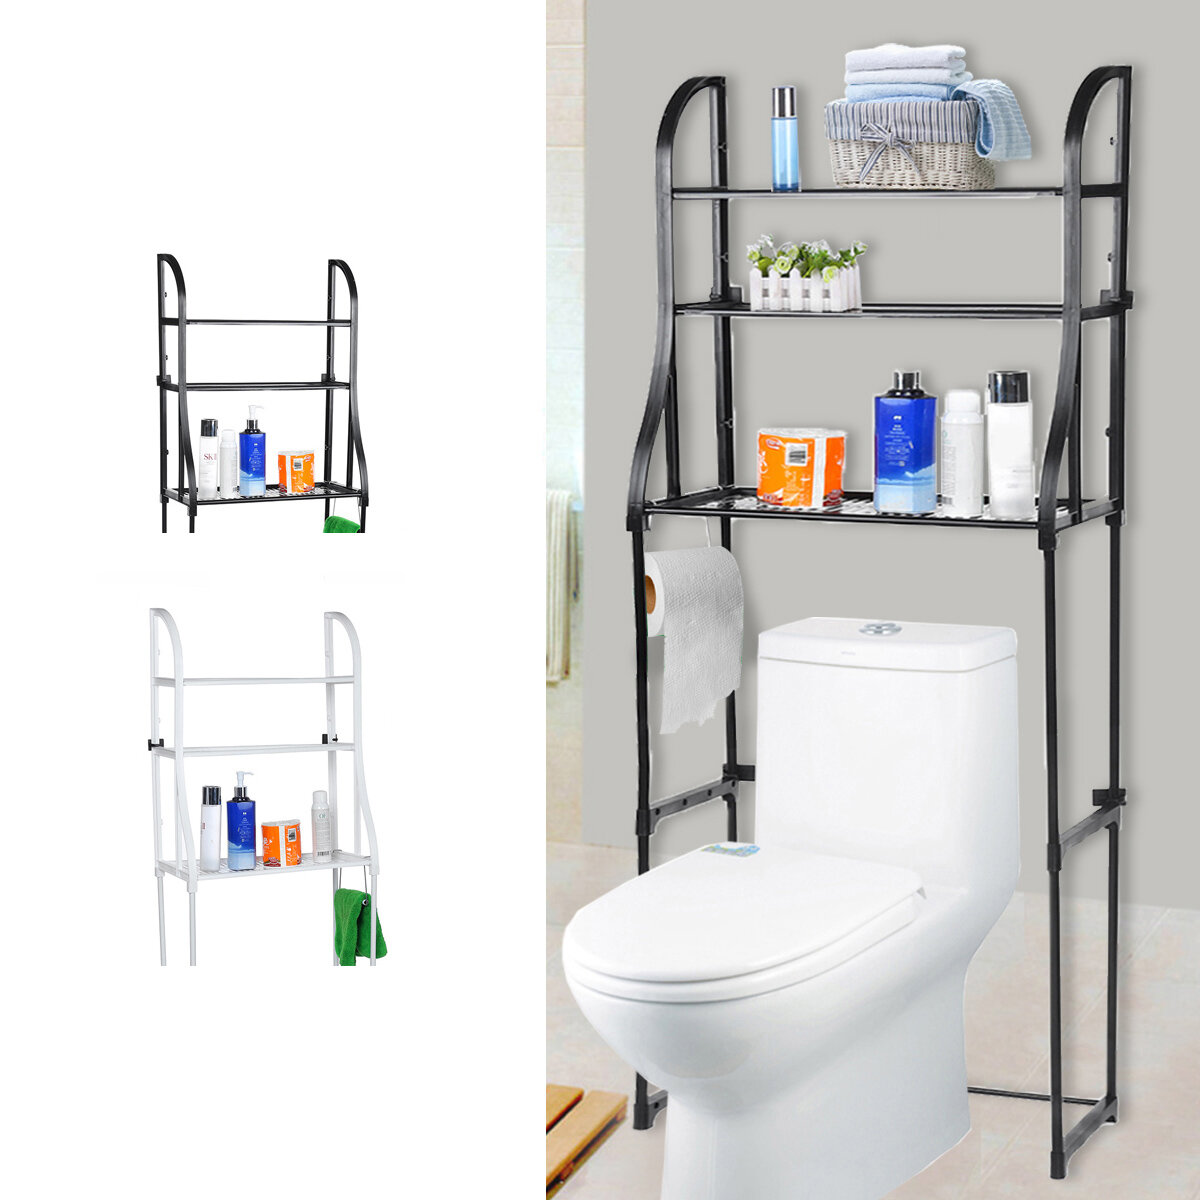 

3 Tiers Over Toilet Storage Rack Bathroom Kitchen Organizer Space Saver Shelf Toilet Paper Bath Towels Shampoo Shower Ge